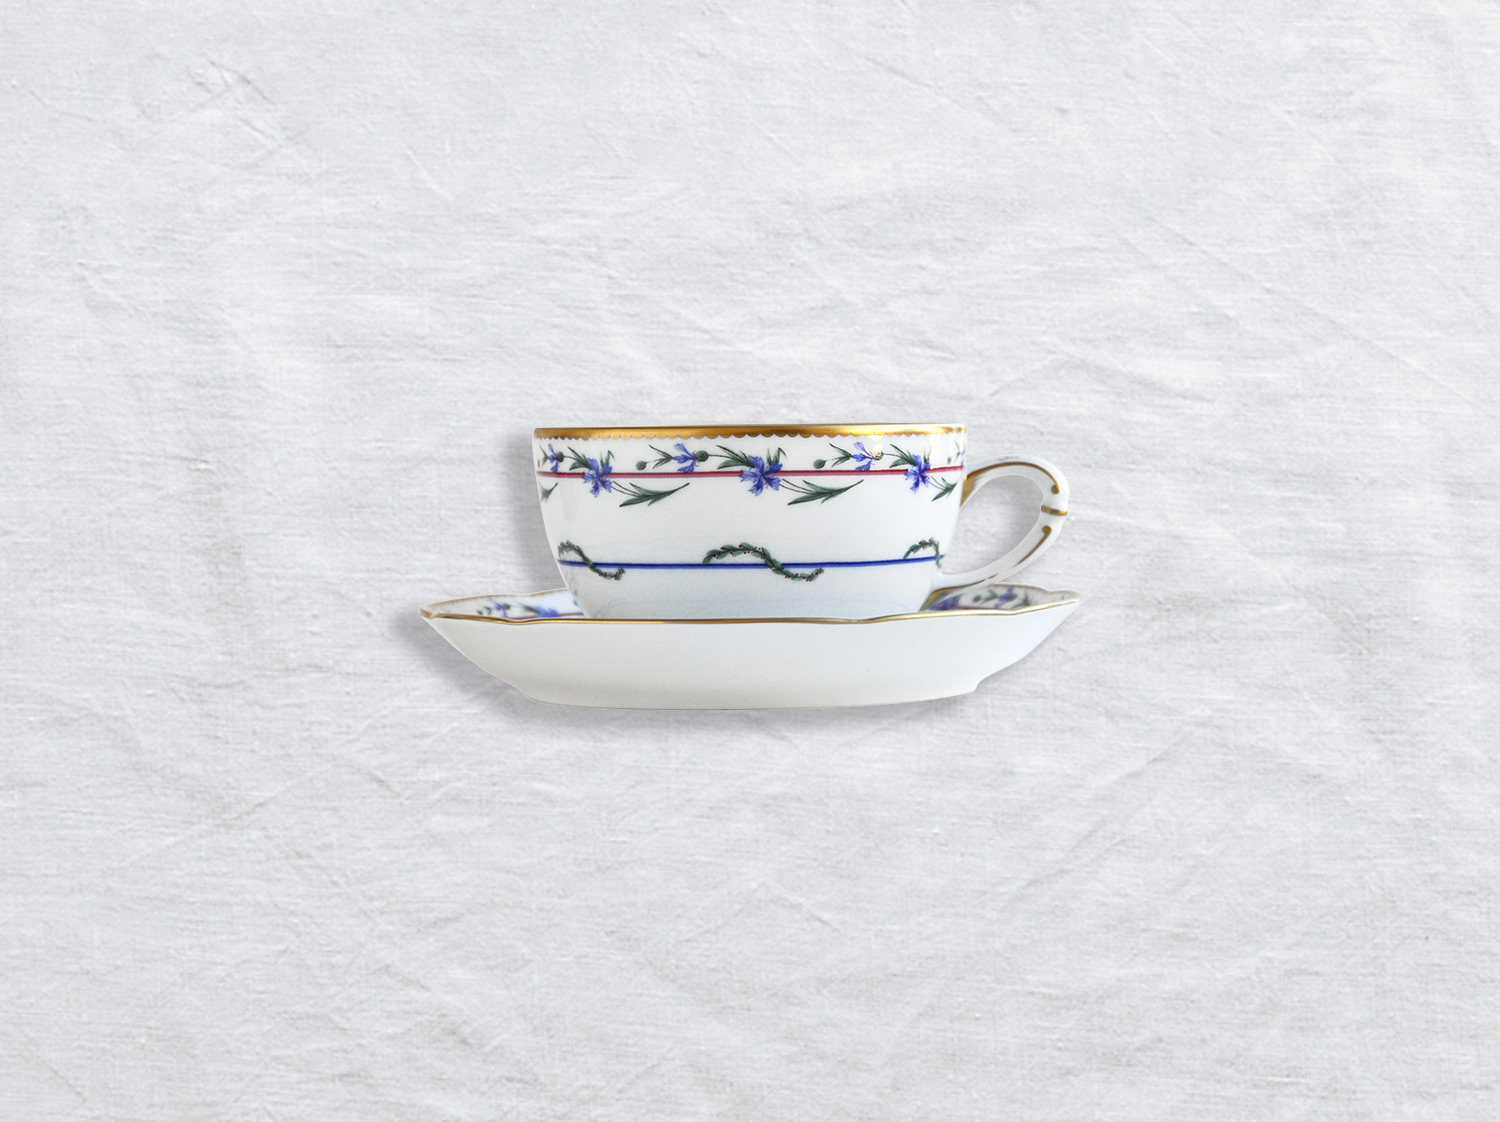 Valse Bleue Tea Cup and Saucer